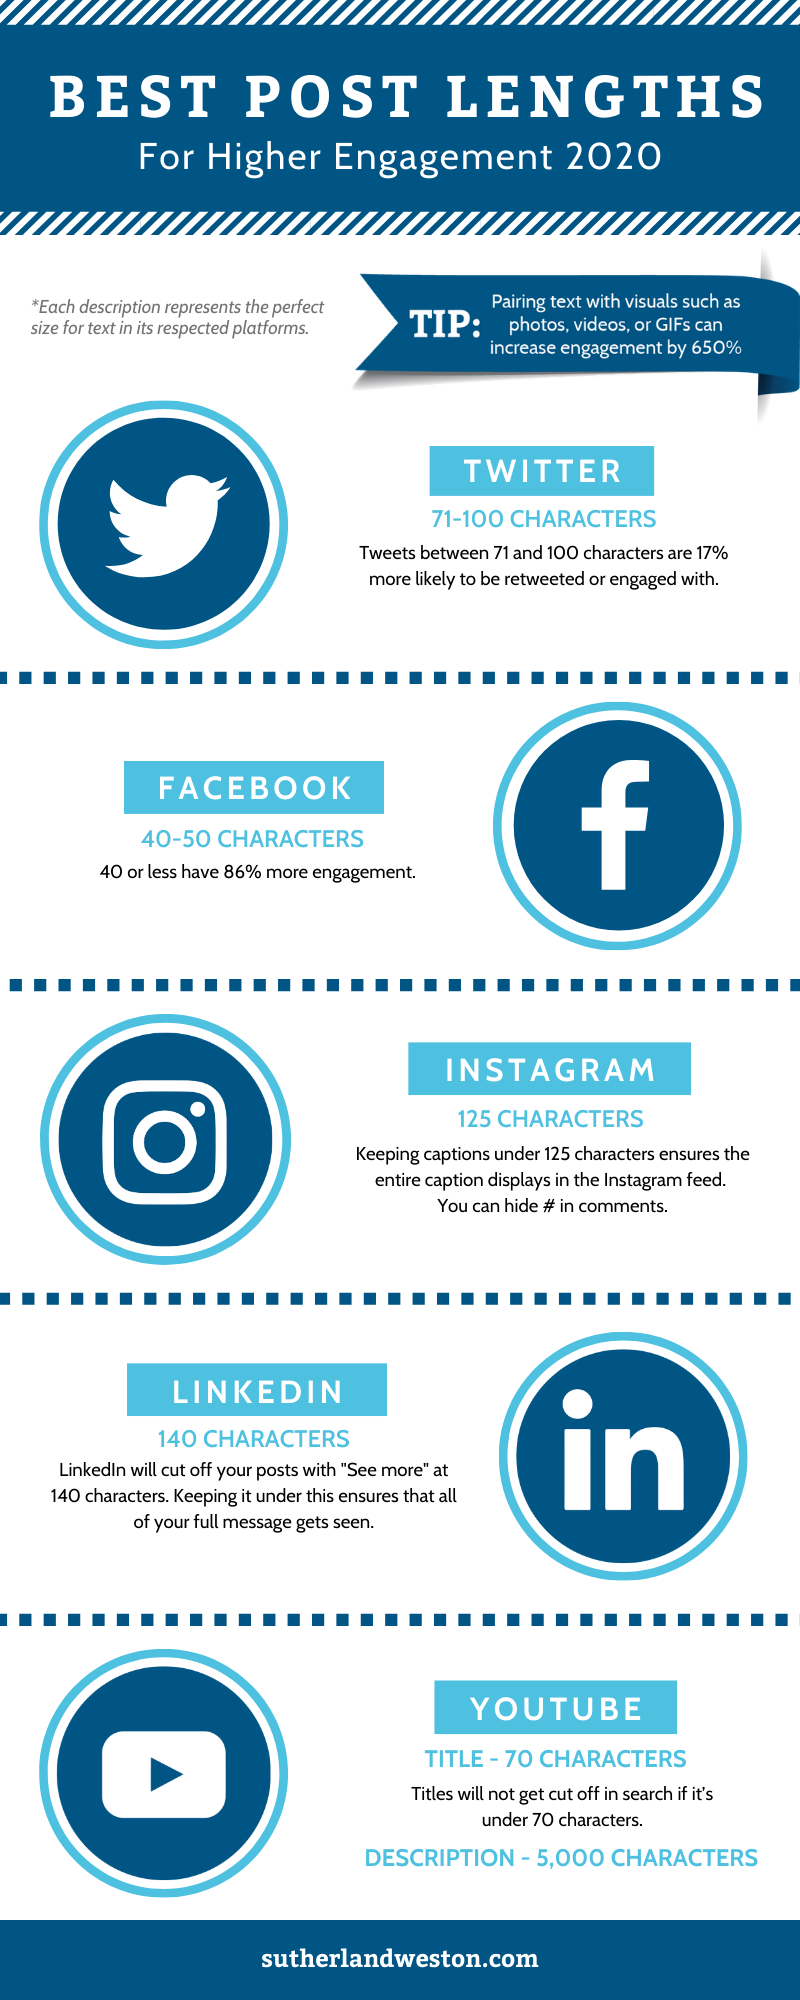 best social media post lengths for higher engagement in 2020 infographic